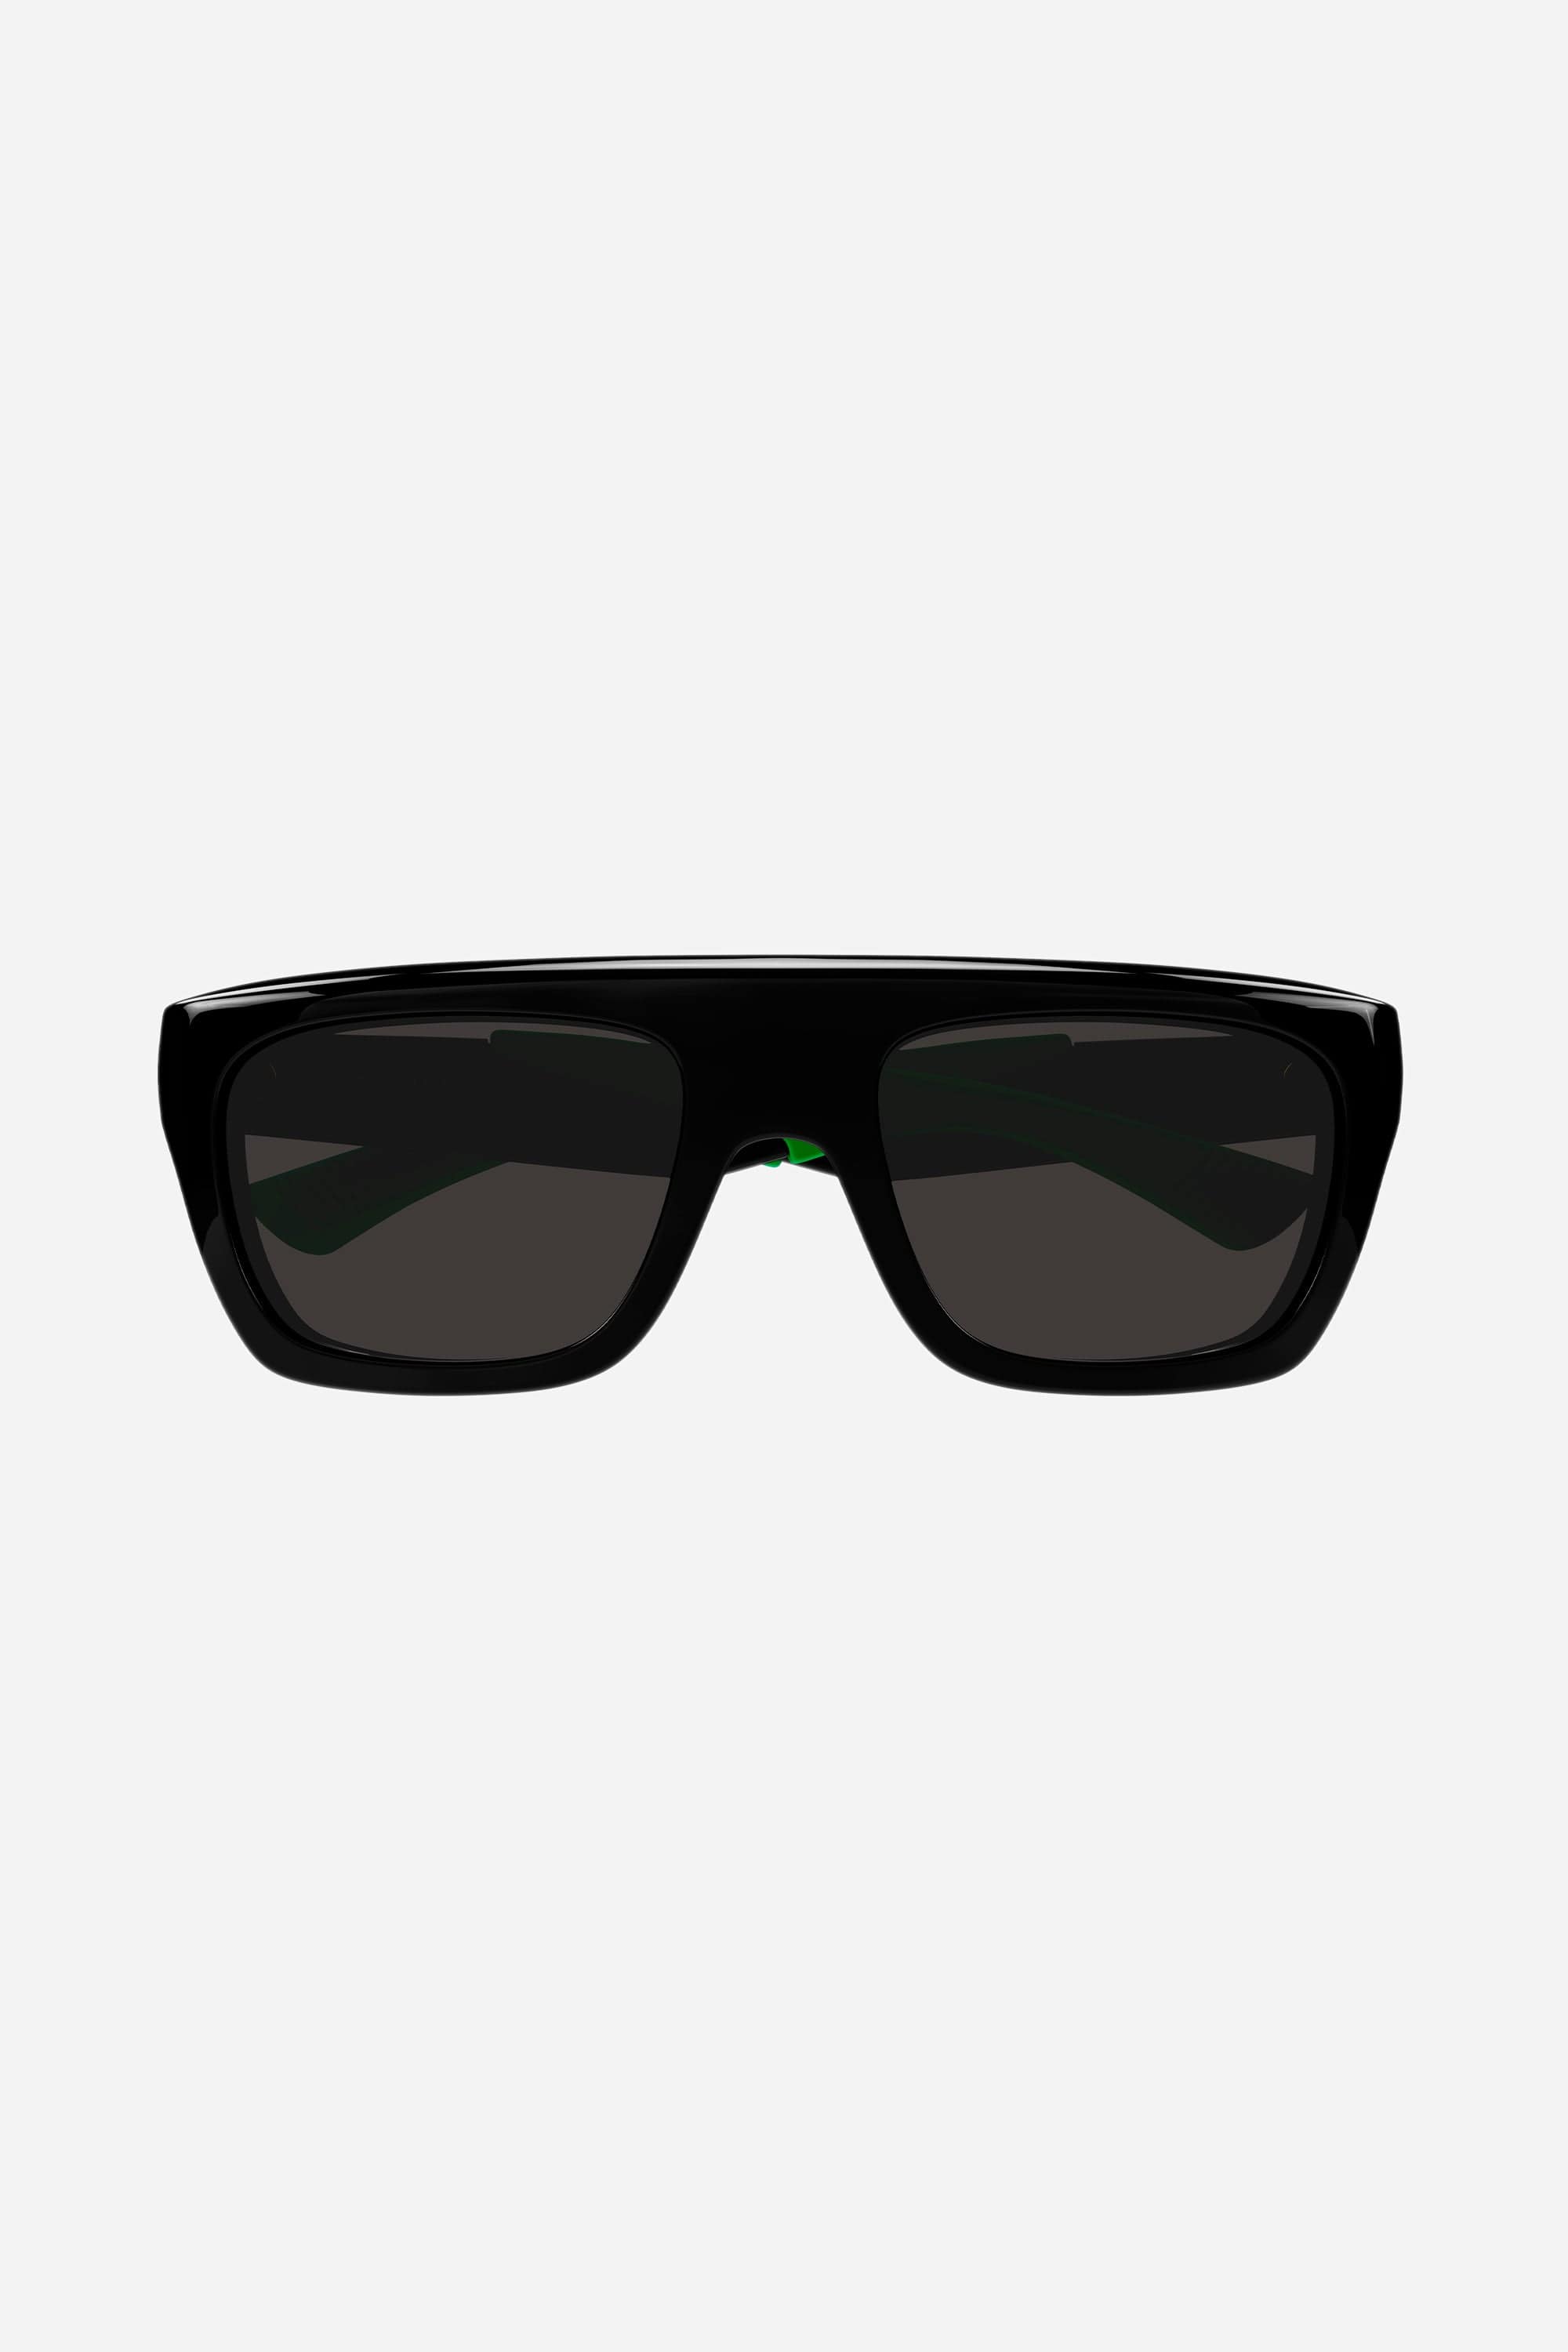 Bottega Veneta wrap around squared black sunglasses - Eyewear Club